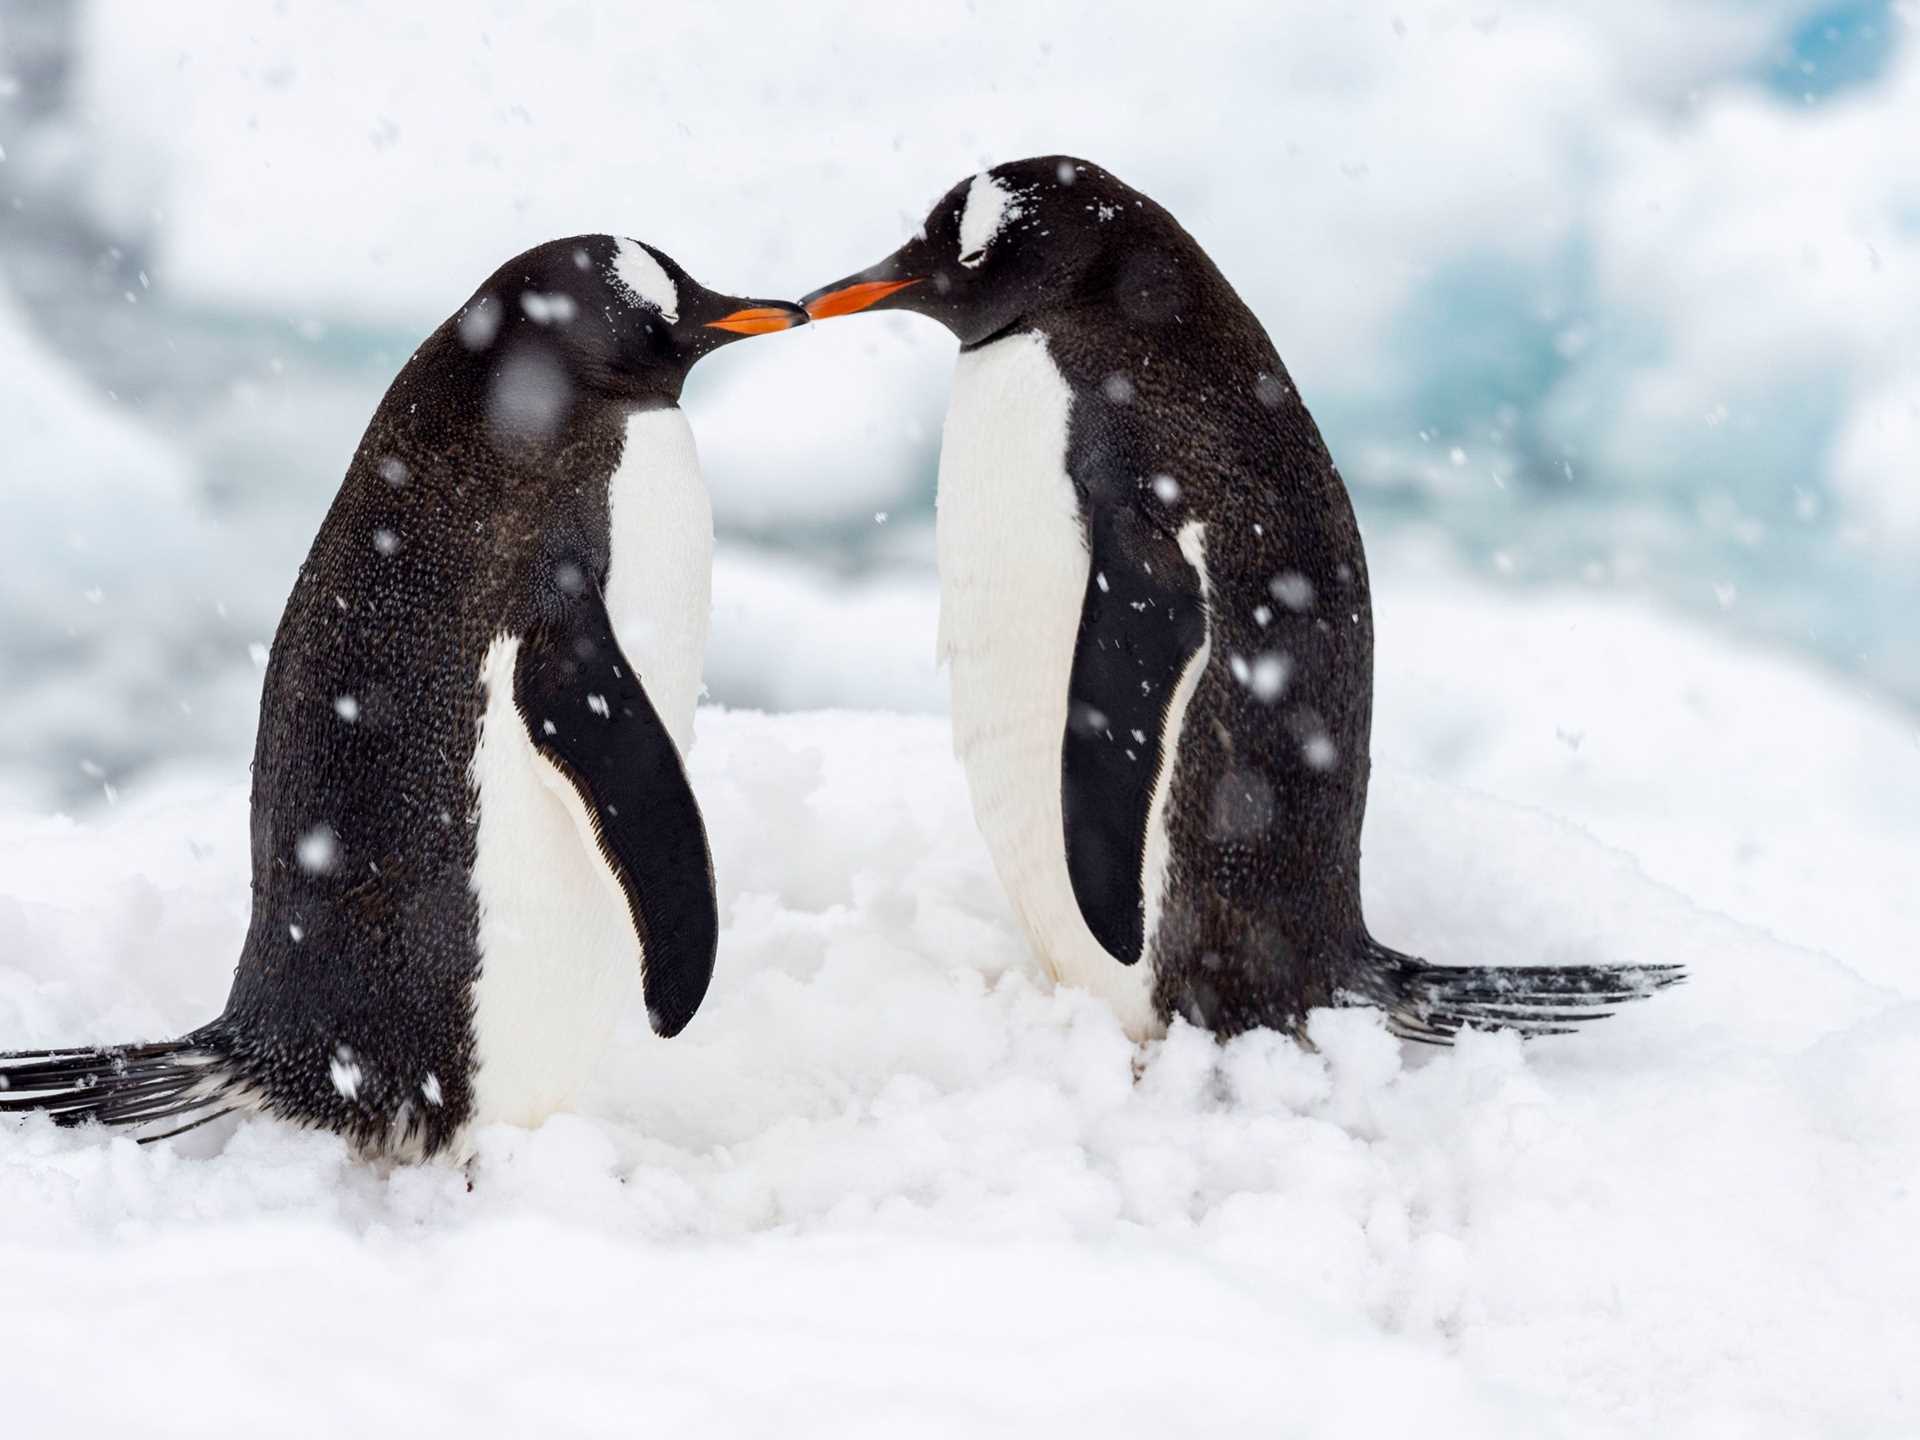 two penguins touching beaks